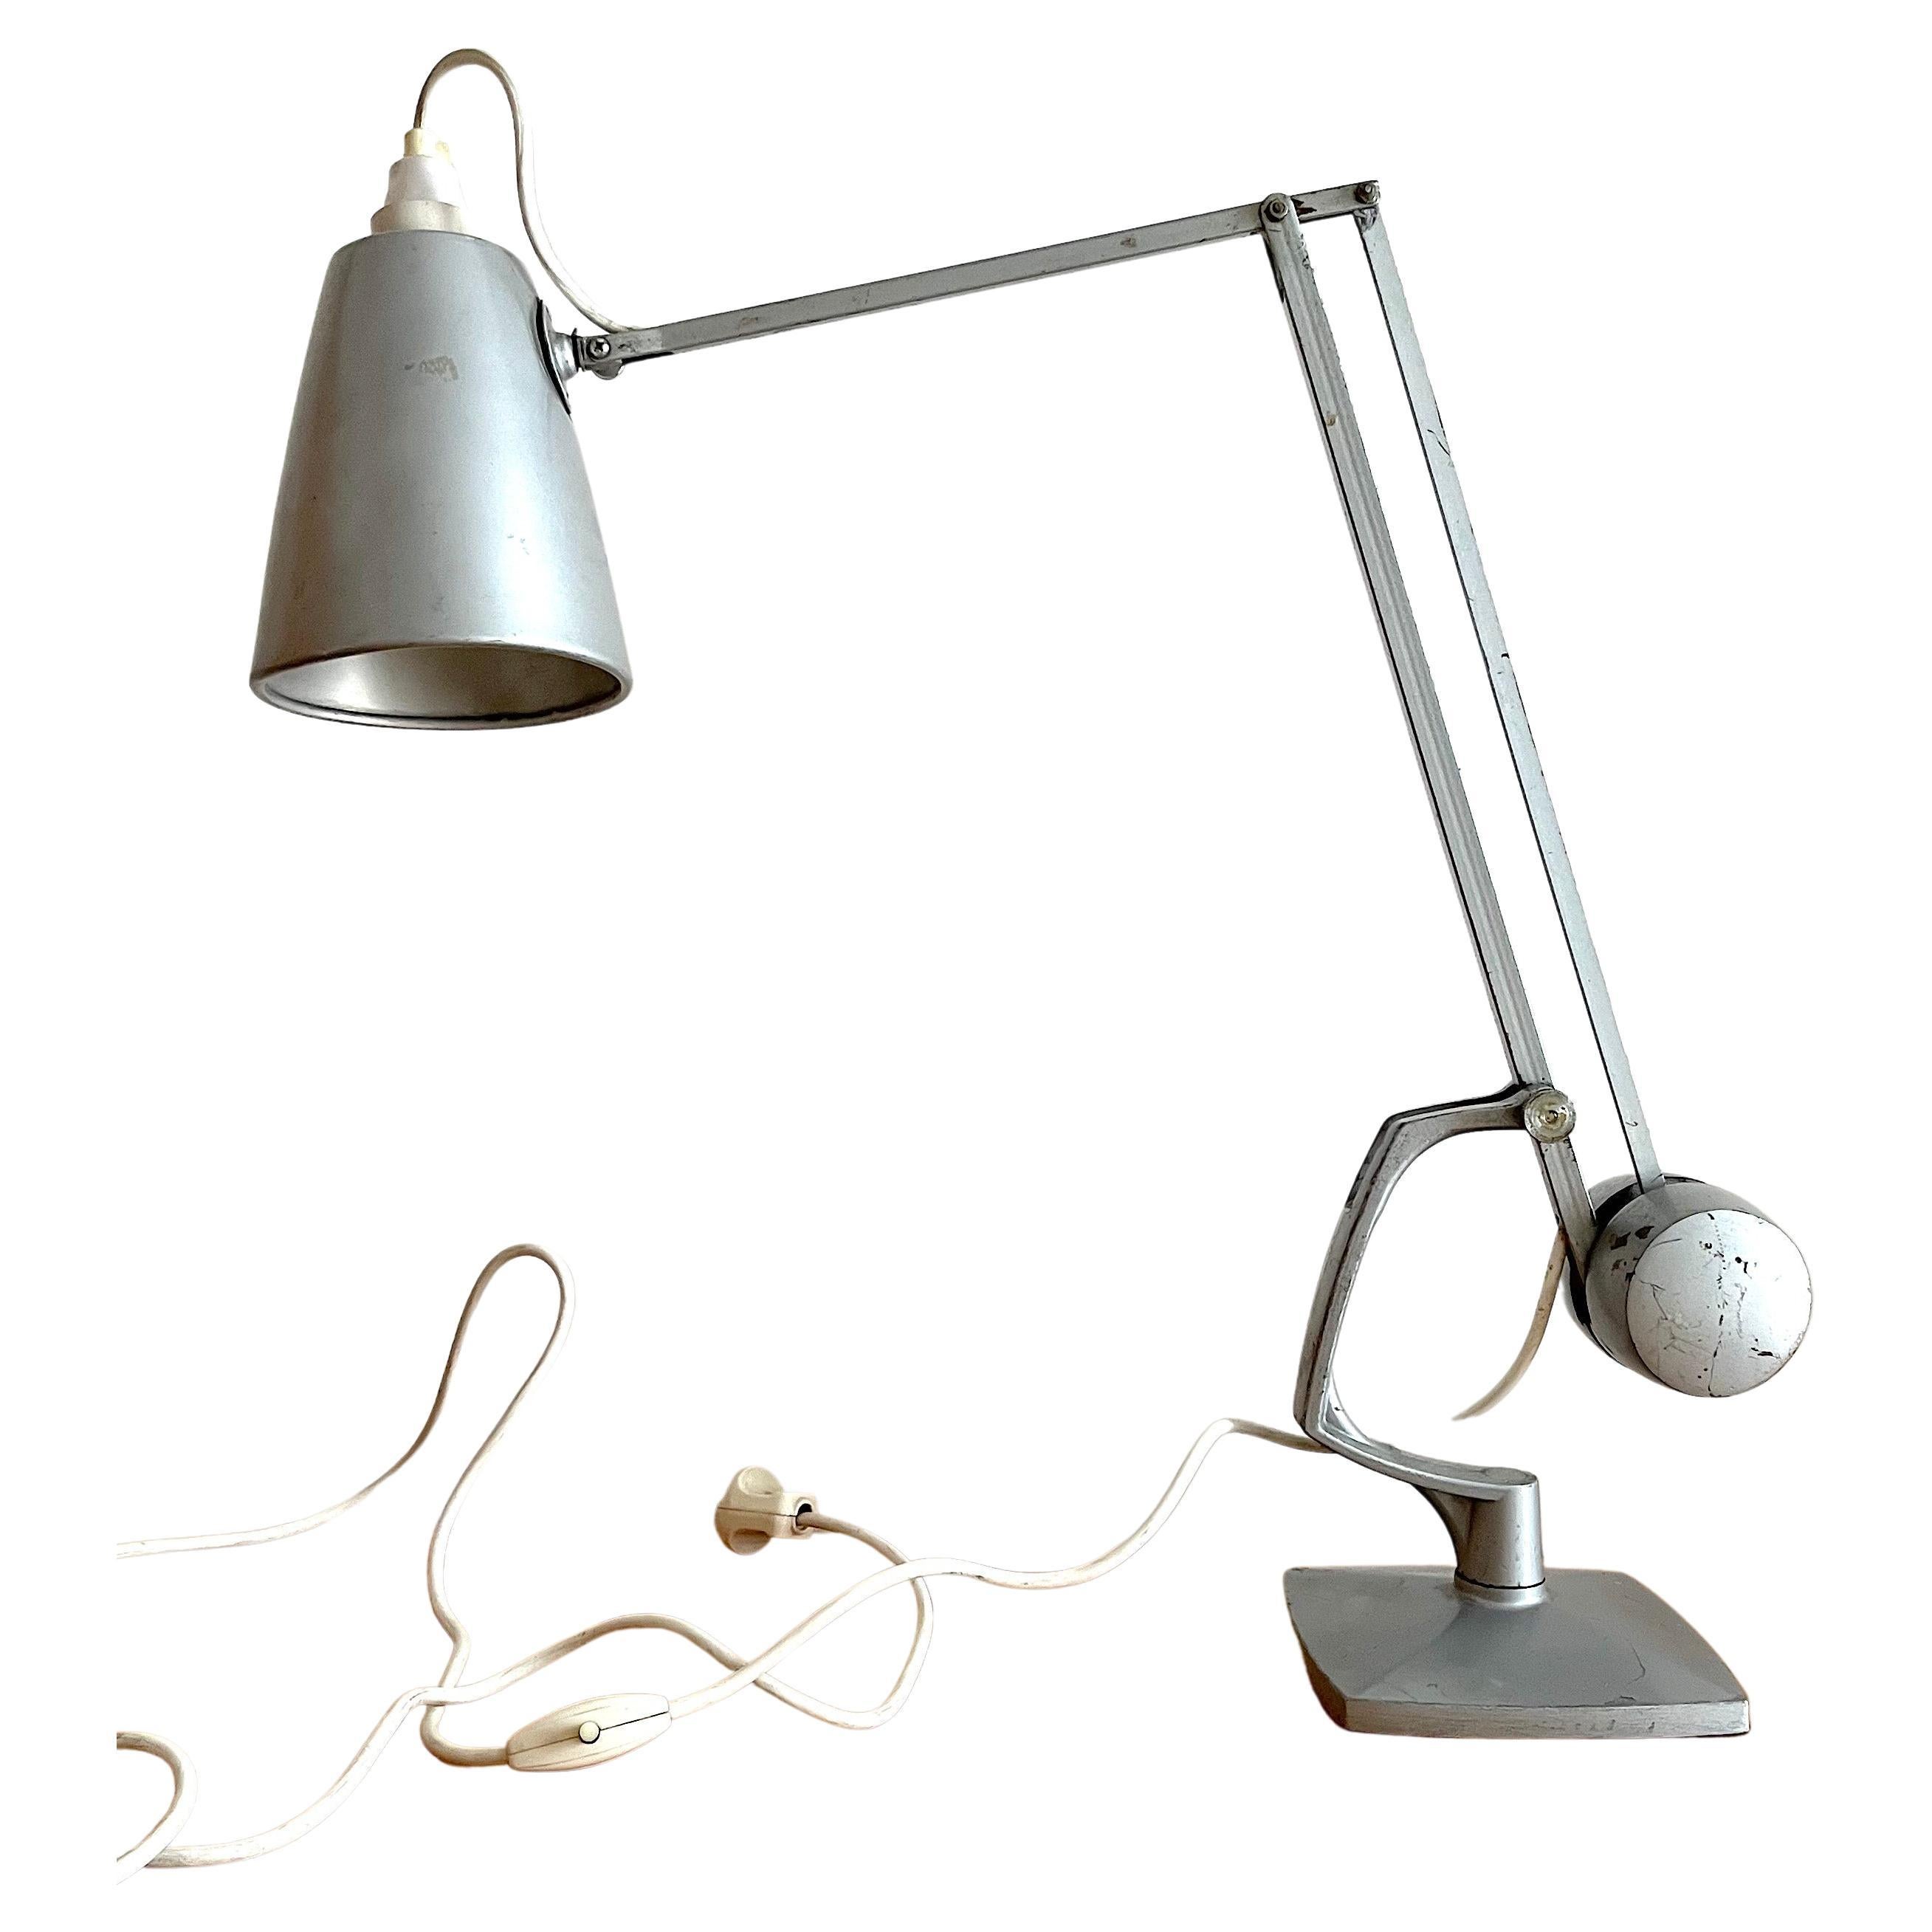 Lamp Hadrill & Horstman Mod.Simplus 1950 For Sale